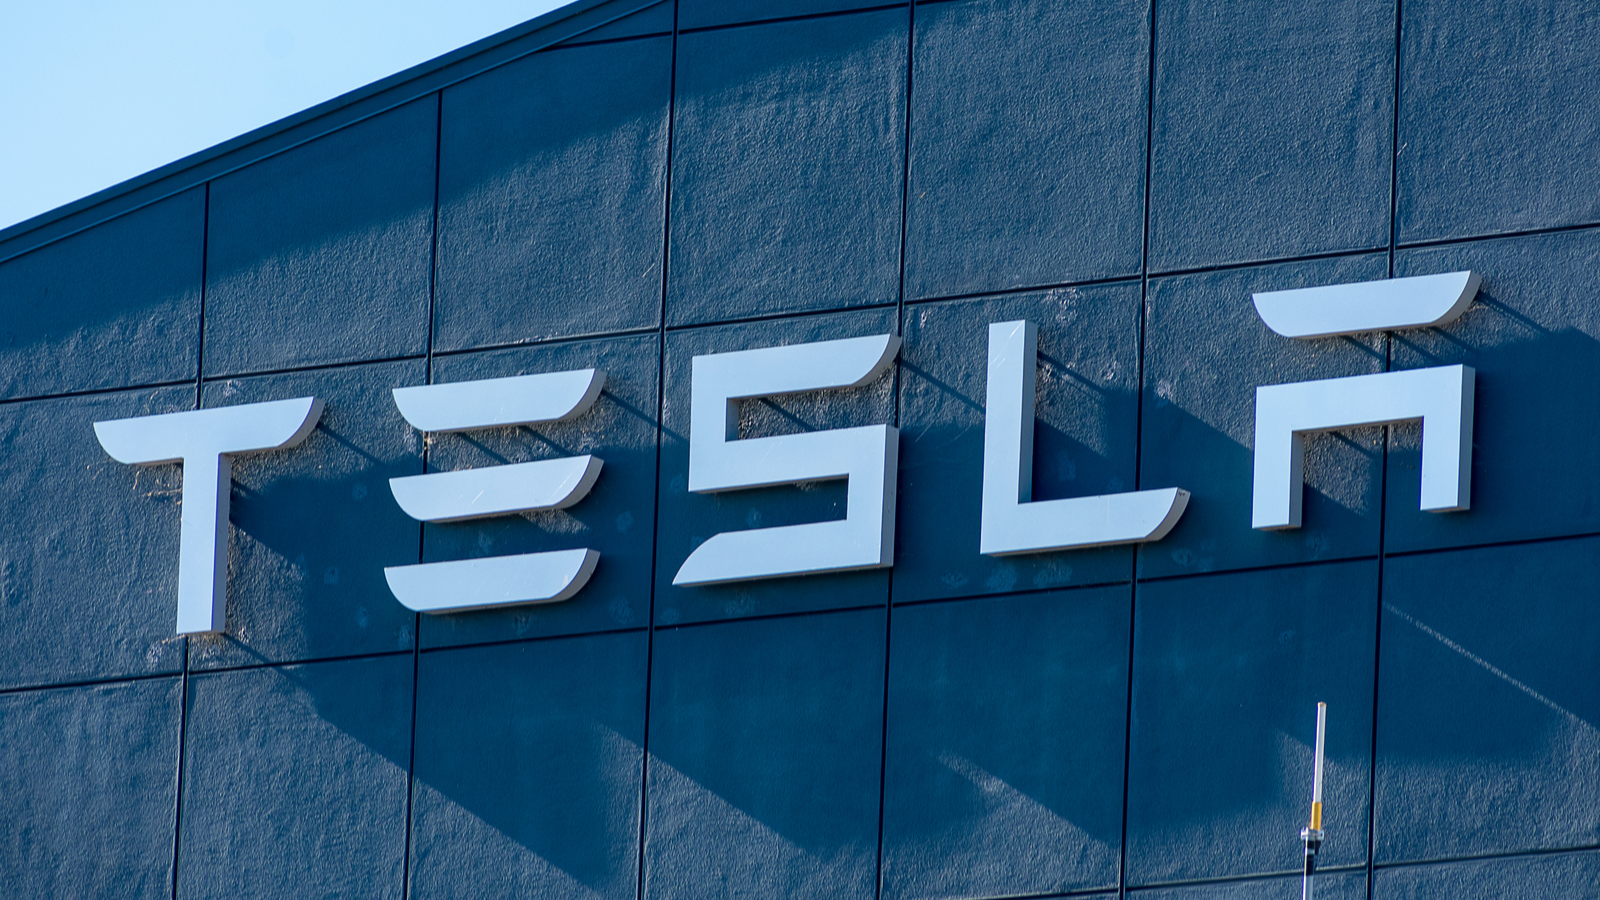 The Tesla (TSLA Stock) logo on the side of a building.